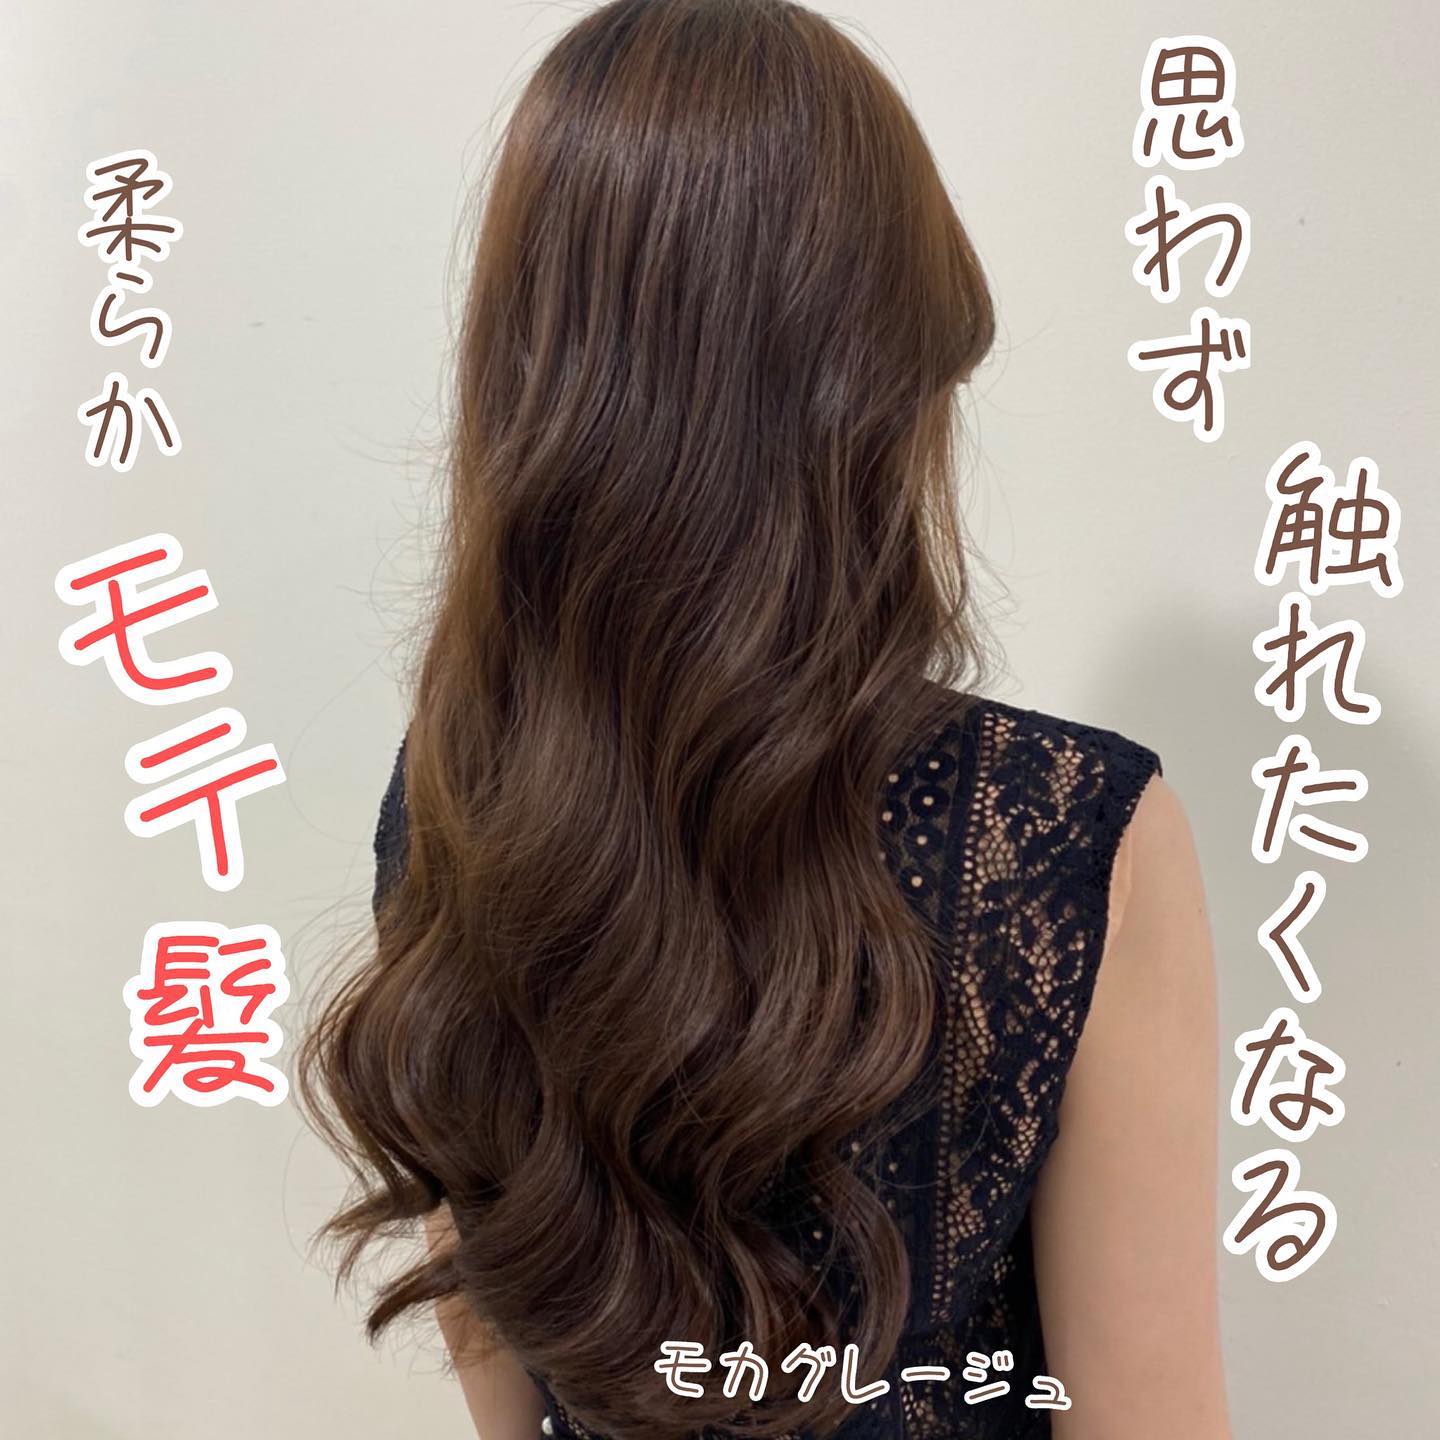 ️やわらかモテ髪に️  モカグレージュは柔らかさと艶感で触りたくなるカラーです  モテ色はいかがですか  เป็นสีที่ได้รับความนิยมมากในช่วงนี้❣️
สีที่ดูธรรมชาติ สีที่อยากจะสัมผัส
แนะนำสีนี้เลยค่ะ
Mocha Greige❣️  YAMS Yamada  #ร้านทำผมญี่ปุ่น #YAMShaircafe #ตัดผมญี่ปุ่น #ยืดผม ญี่ปุ่น #ดัดผมญี่ปุ่น #ร้านทำผม #バンコク生活 #バンコク在住 #バンコク暮らし #バンコク子連れ美容室 #バンコク美容室